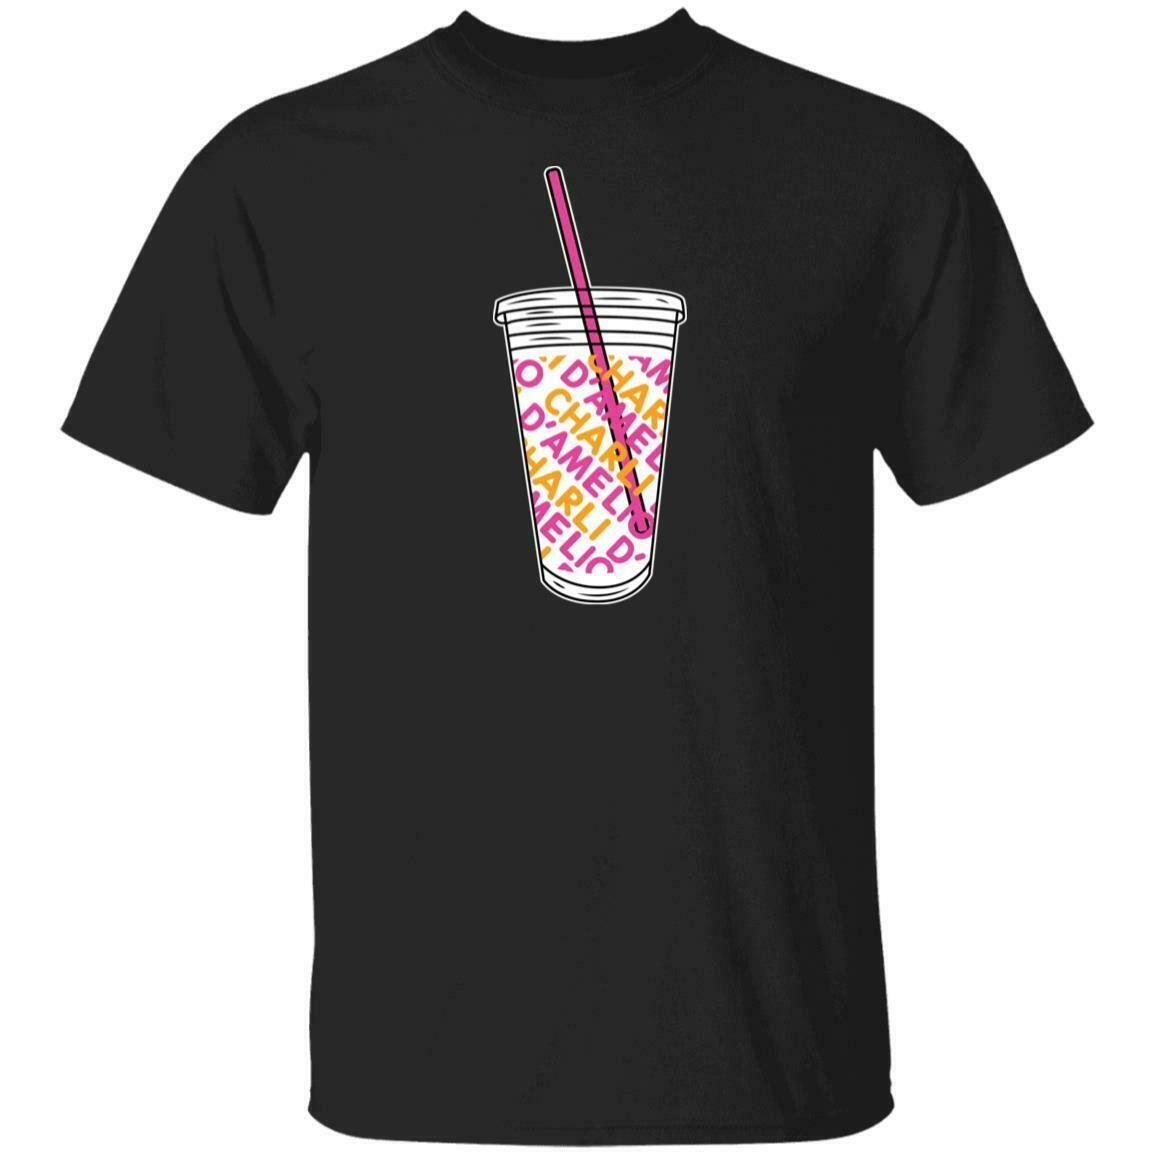 2. Charli D'amelio Merch Iced Coffee Gildan T Shirt S-2XL free shipping